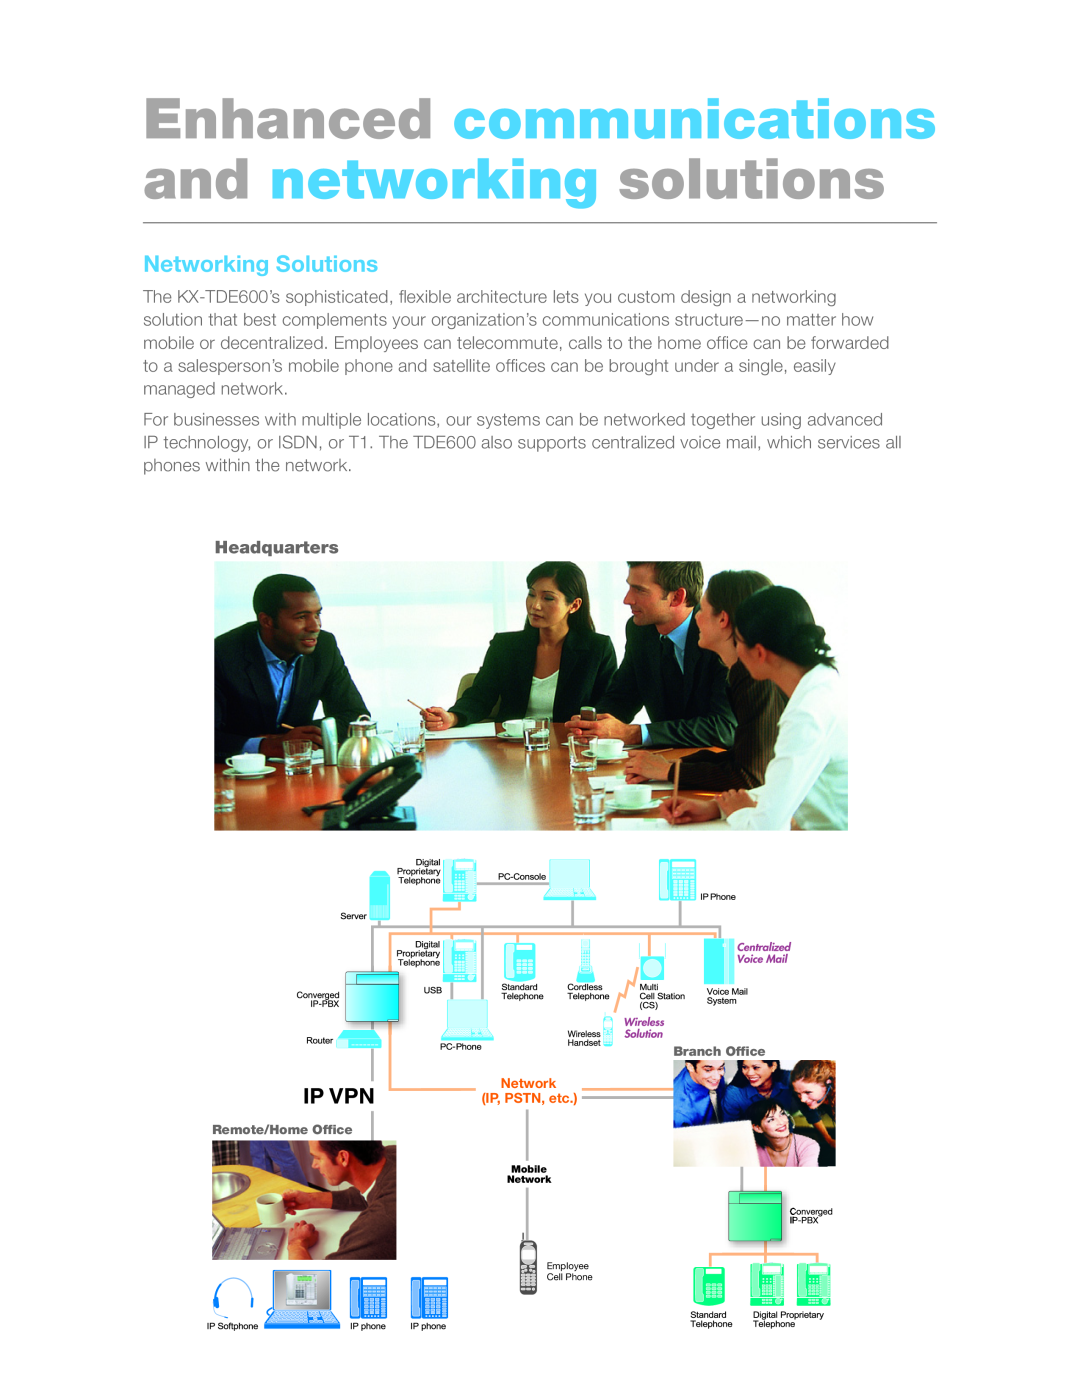 Panasonic KX-T7600, KX-HGT100B, KX-DT300, KX-NT300 Enhanced communications and networking solutions, Networking Solutions 